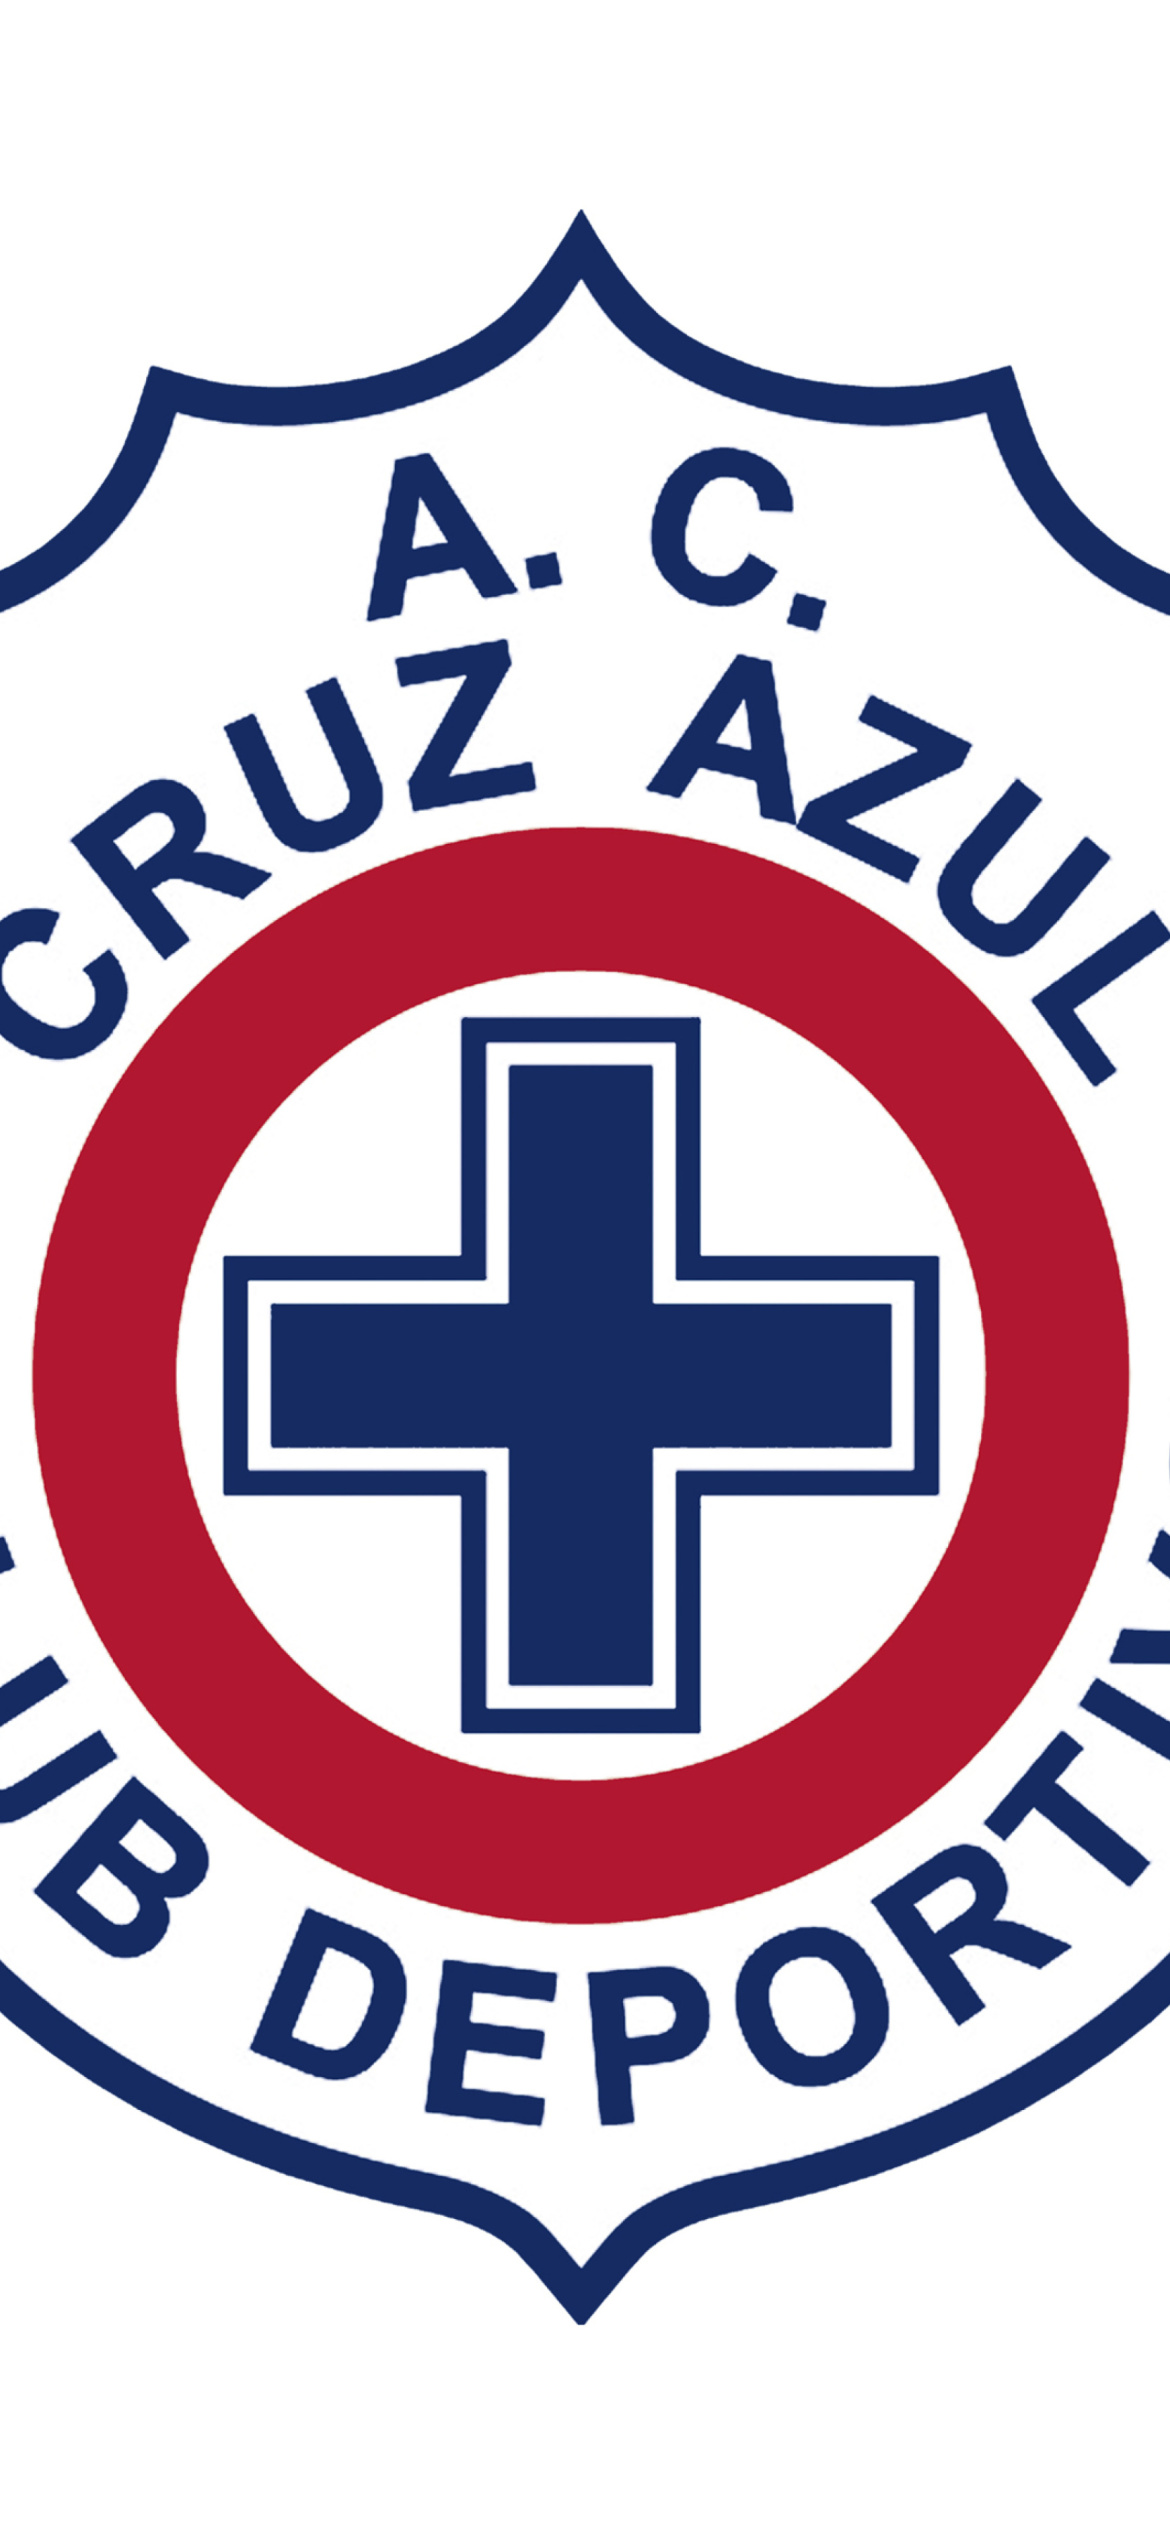 Cruz Azul Club Deportivo - Fondos de pantalla gratis para iPhone XR